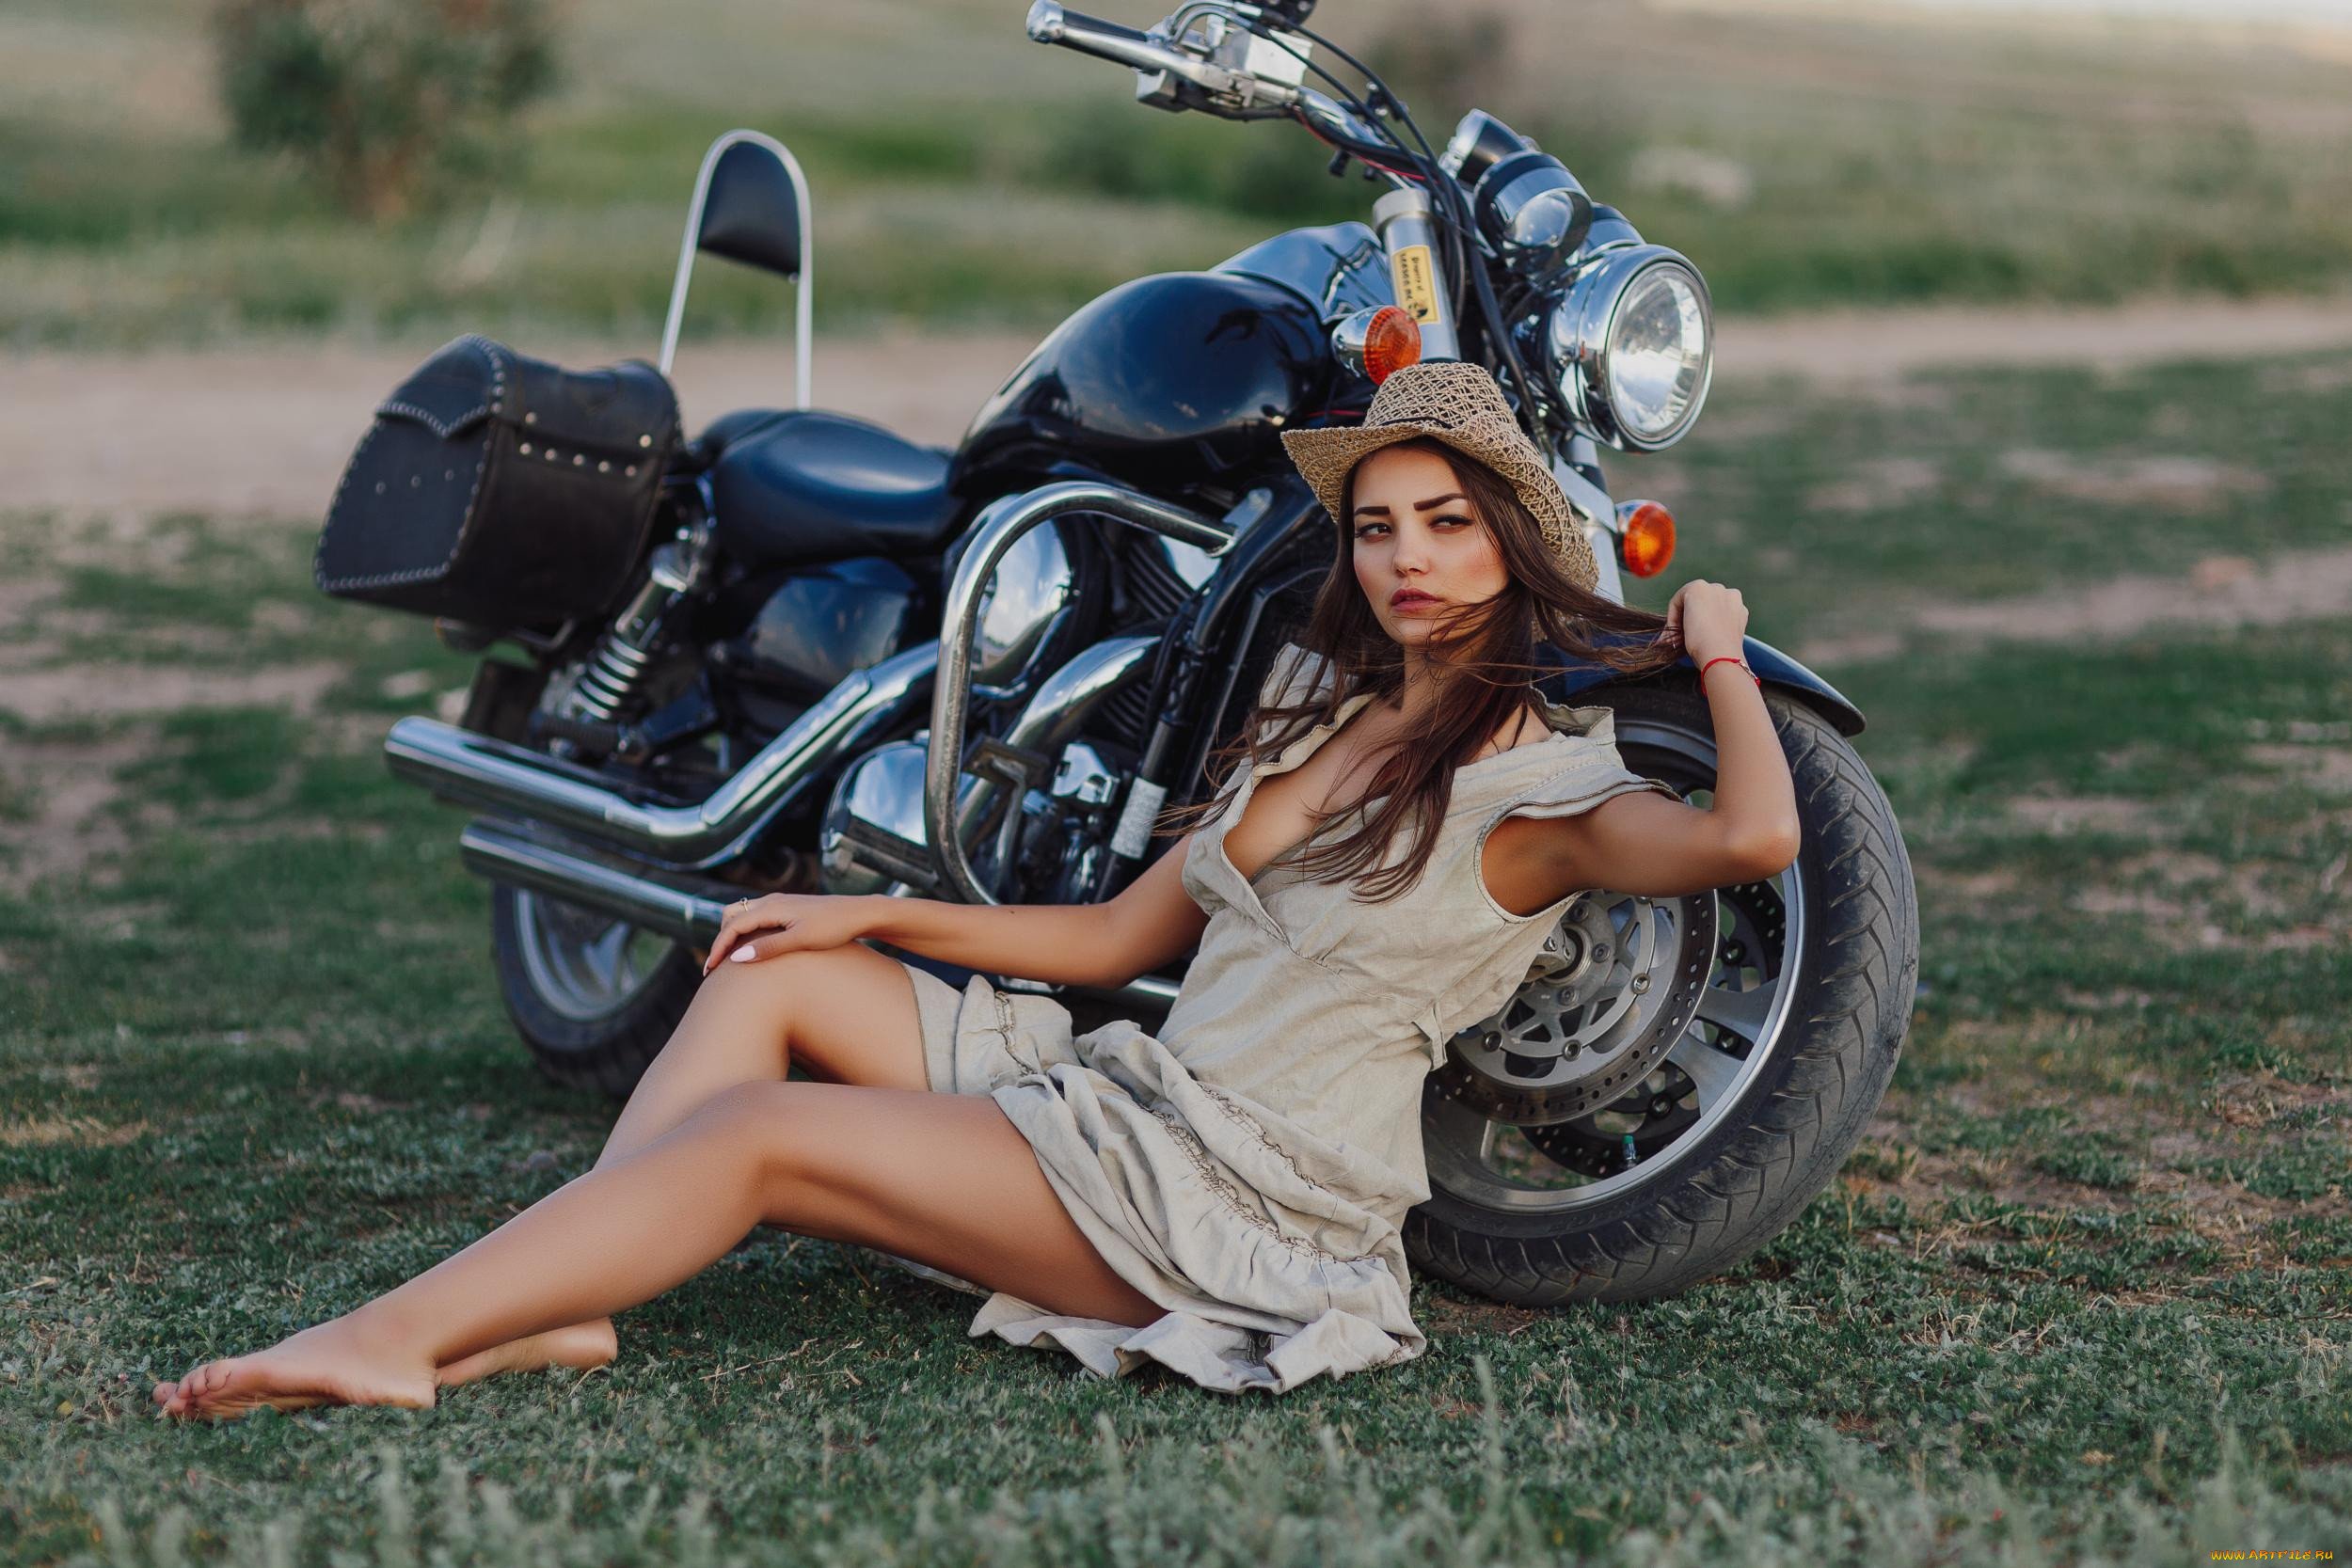 Bike model. Девушка на мотоцикле. Красивые девушки на мотоциклах. Фотосессия на мотоцикле. Фотосессия на мотоцикле в платье.